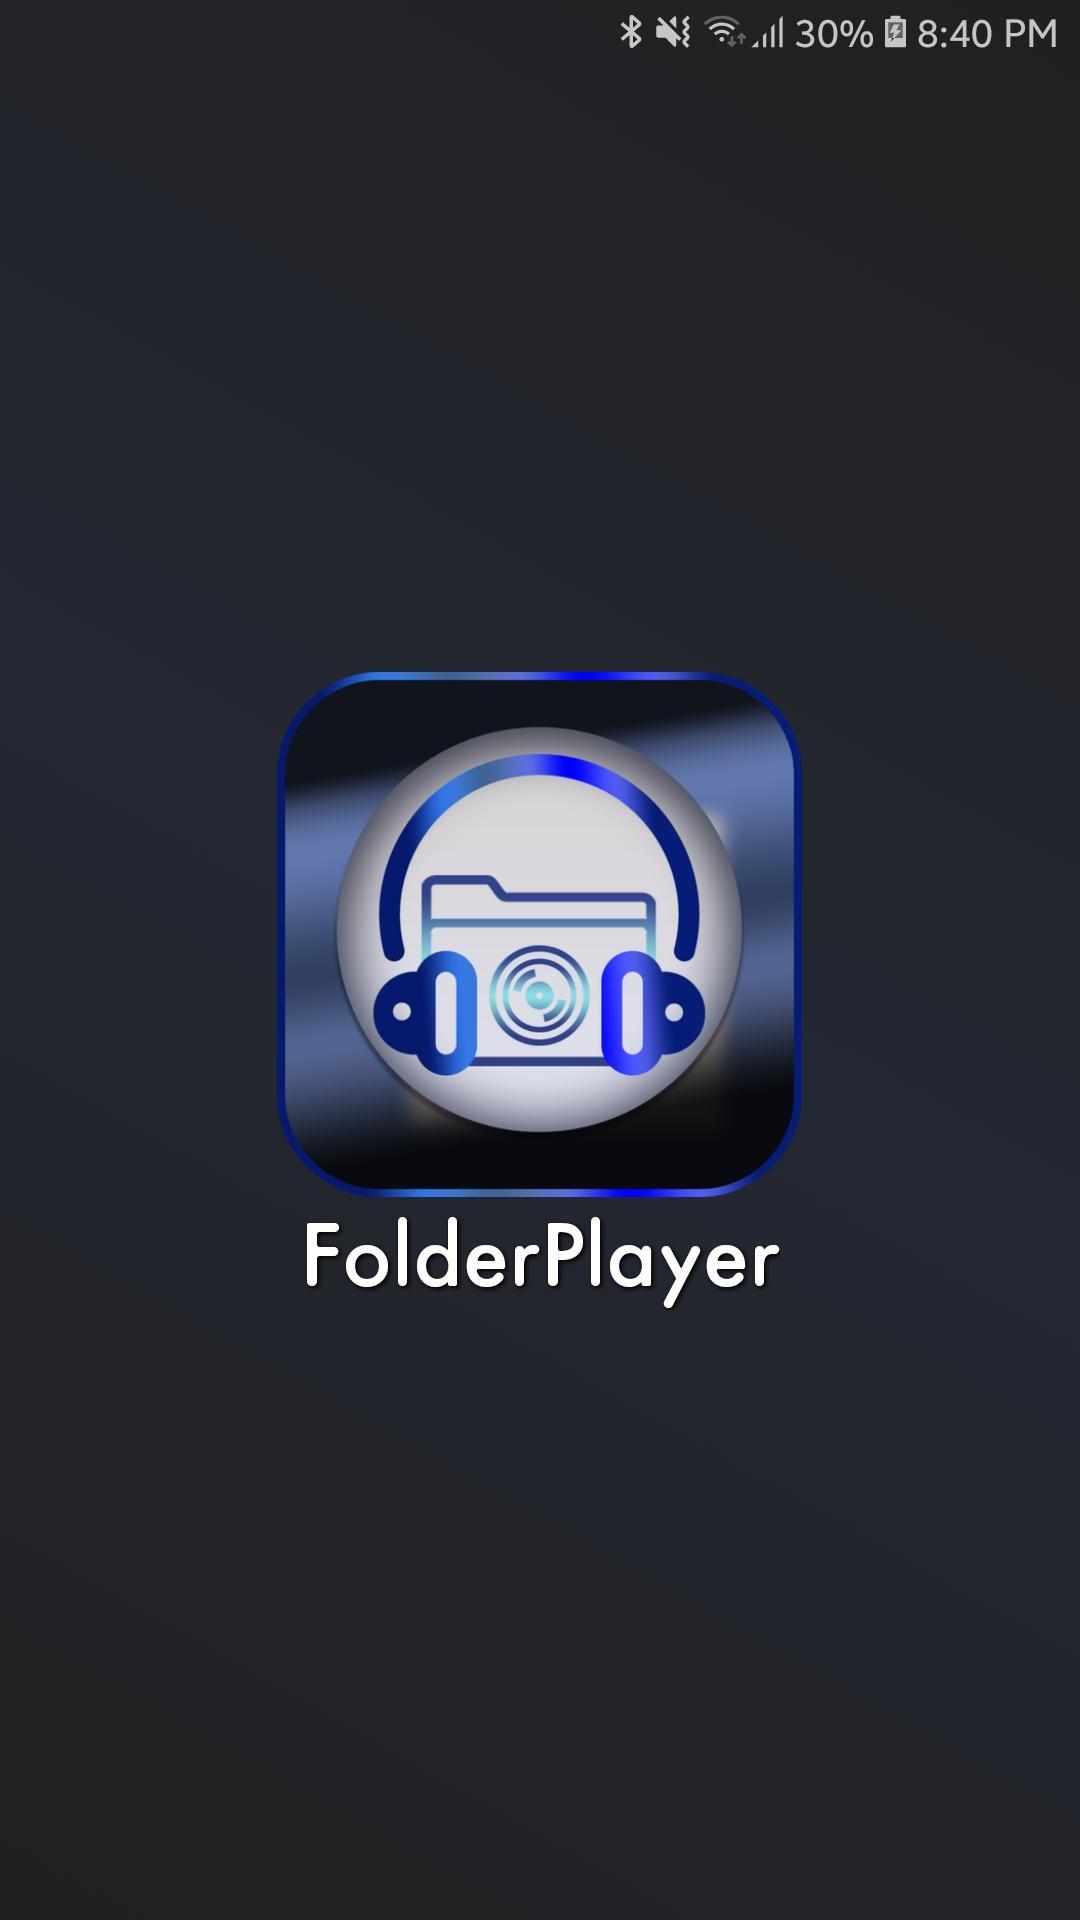 Folder player